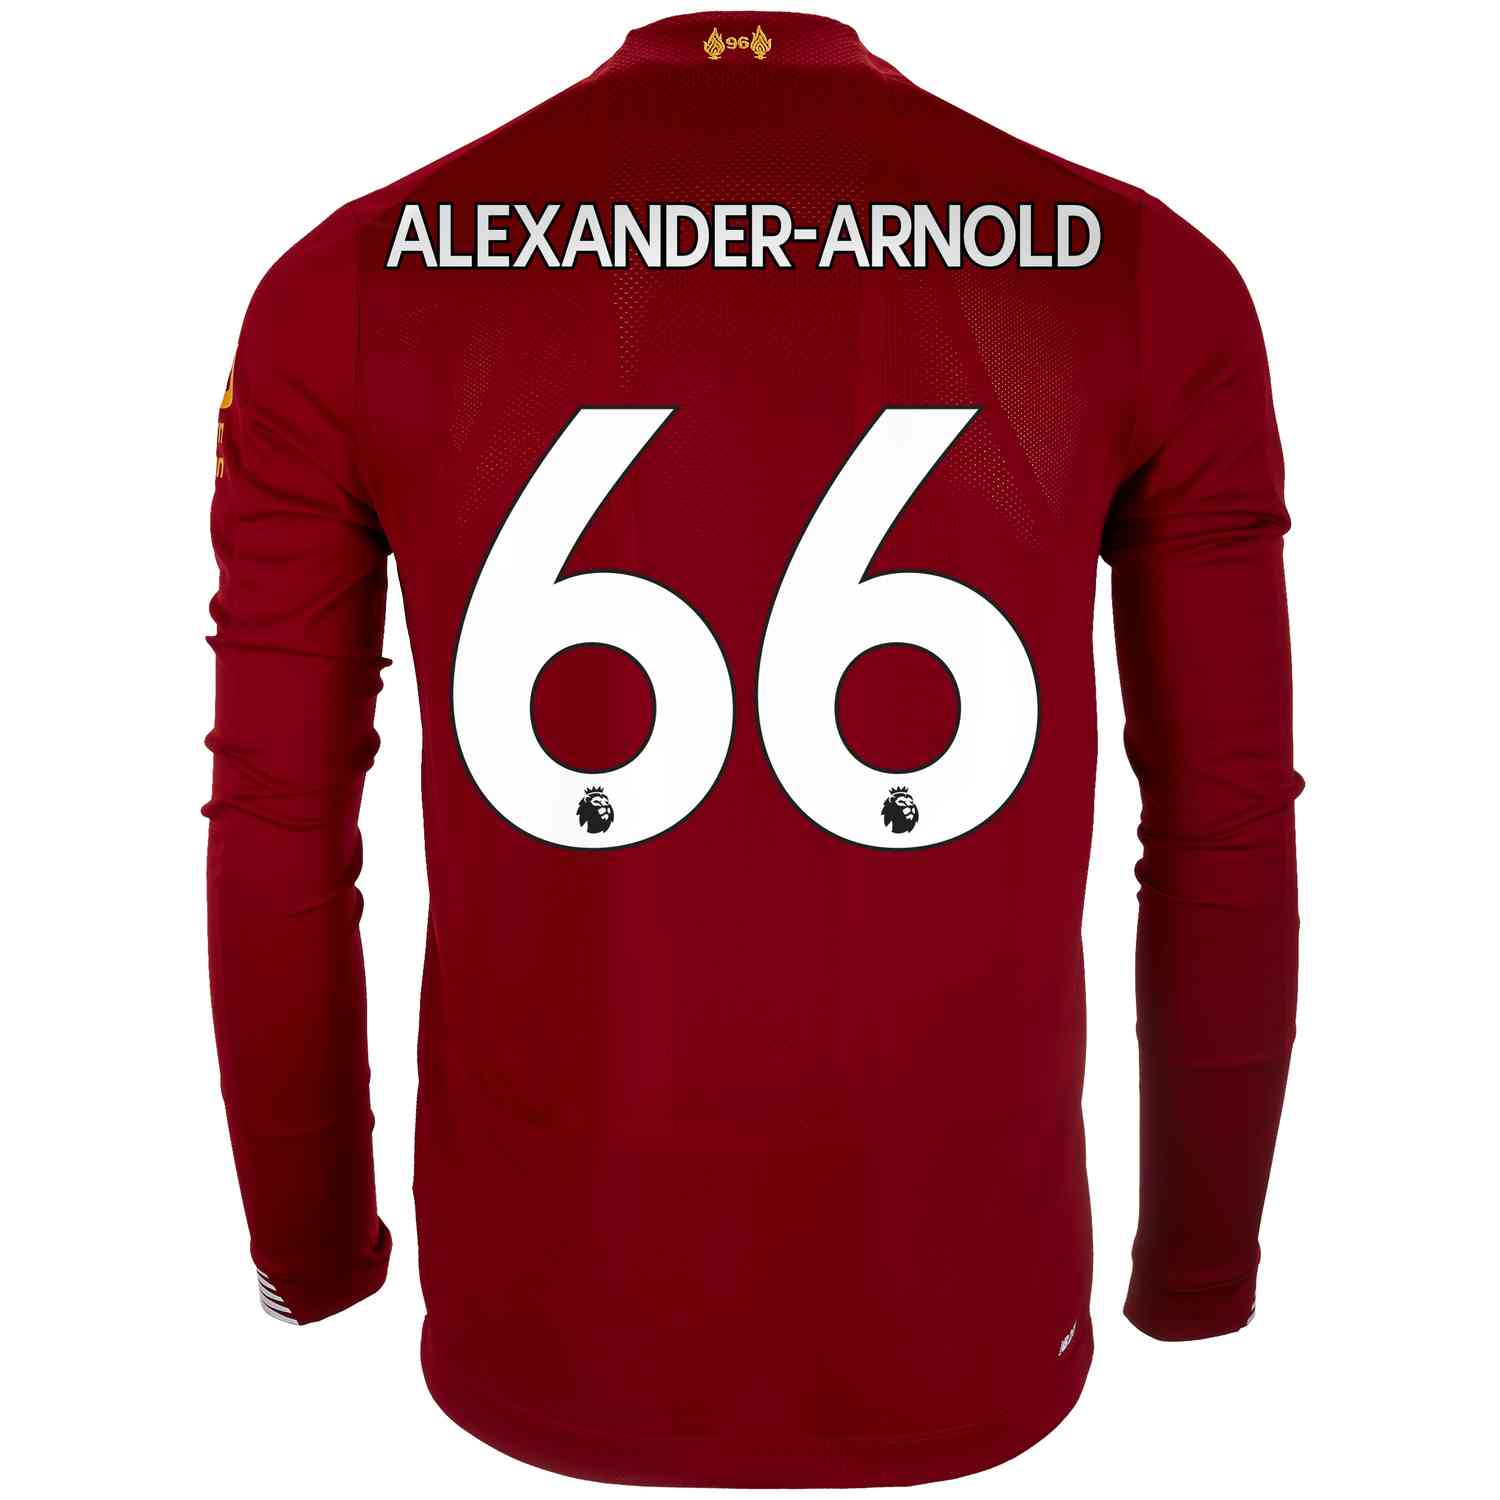 trent alexander arnold jersey number